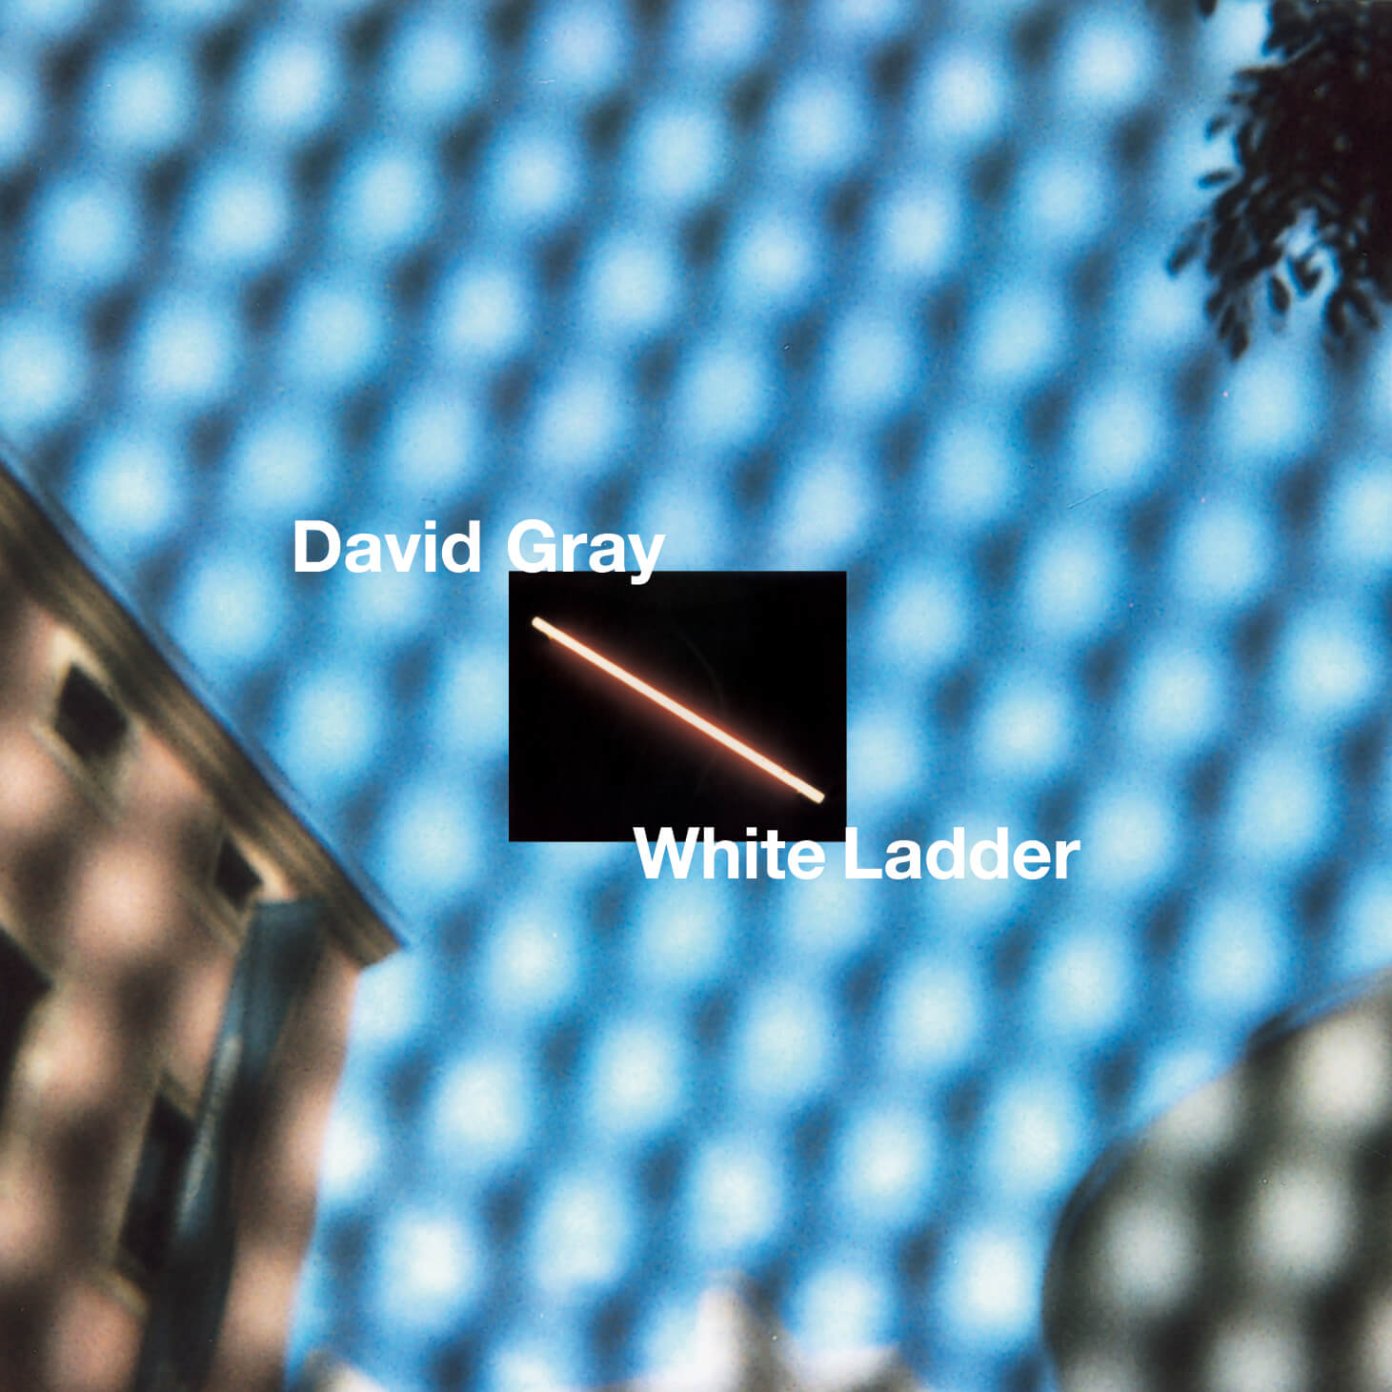 david gray white ladder tour review 2022